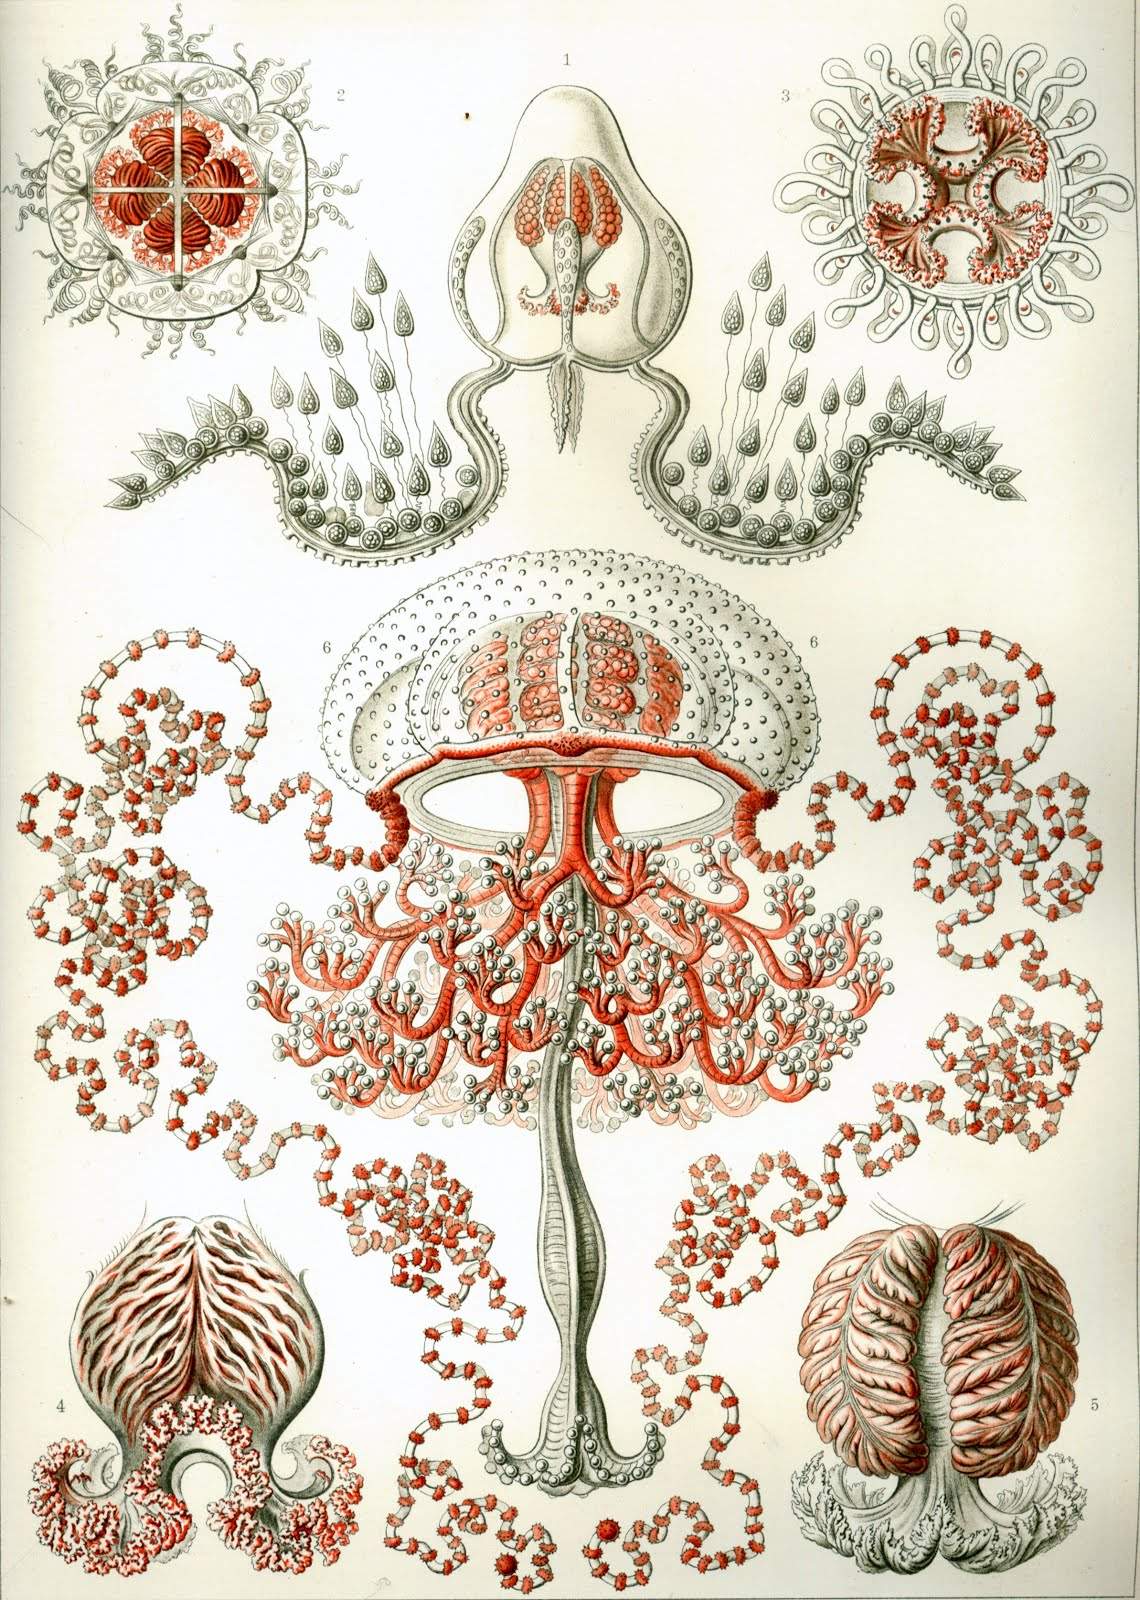 Artforms-in-Nature-Kunstformen-der-Natur-Ernst-Haeckel-Anthomedusae.jpg